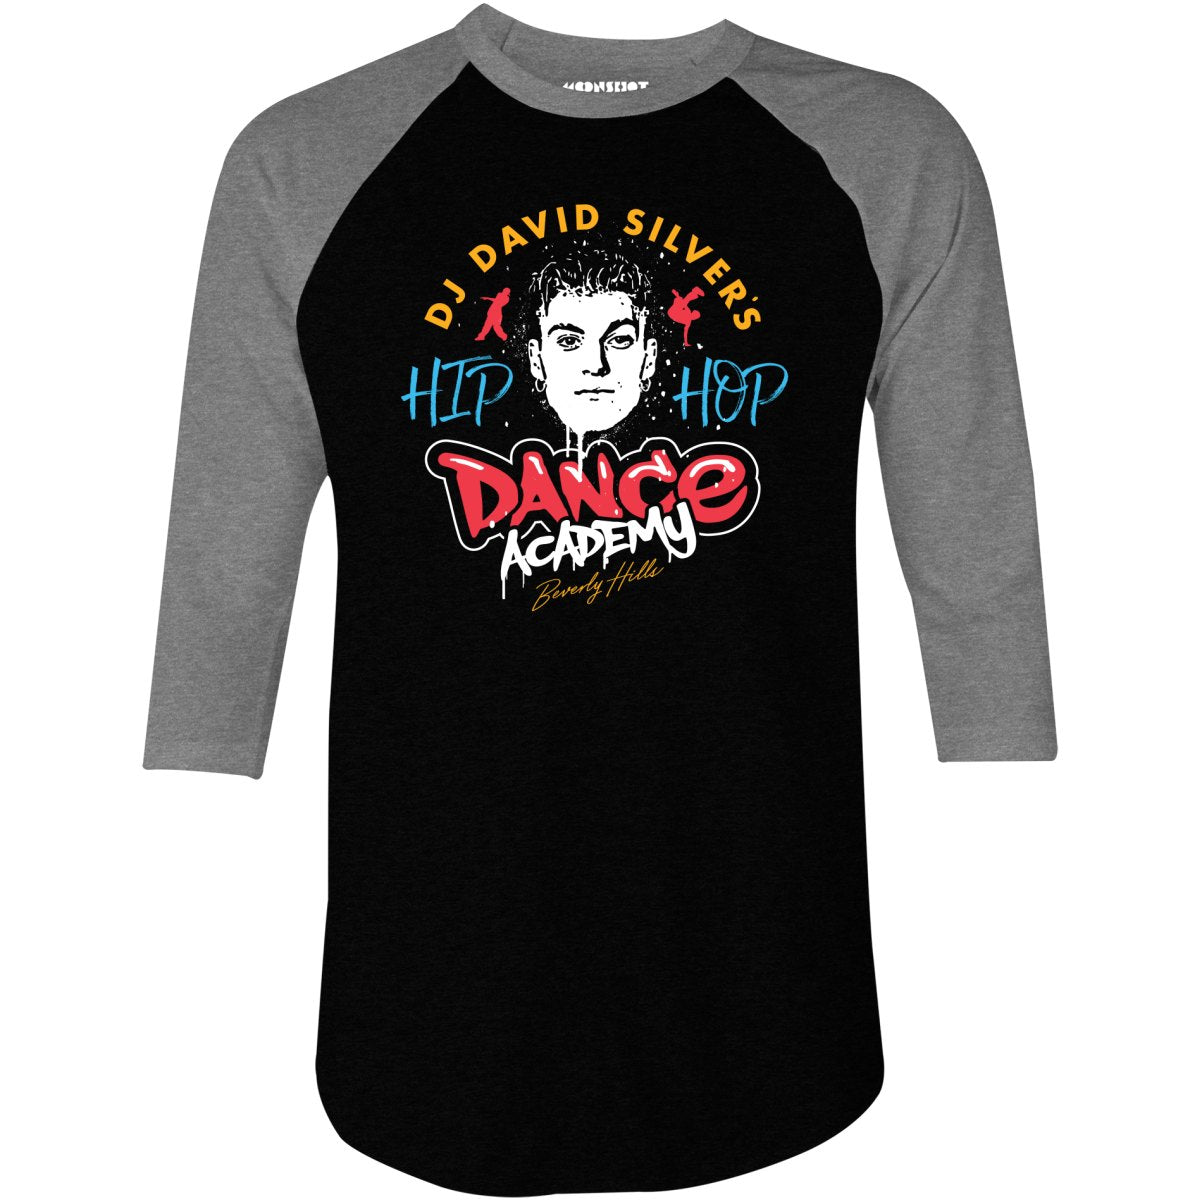 DJ David Silver's Hip Hop Dance Academy - 3/4 Sleeve Raglan T-Shirt